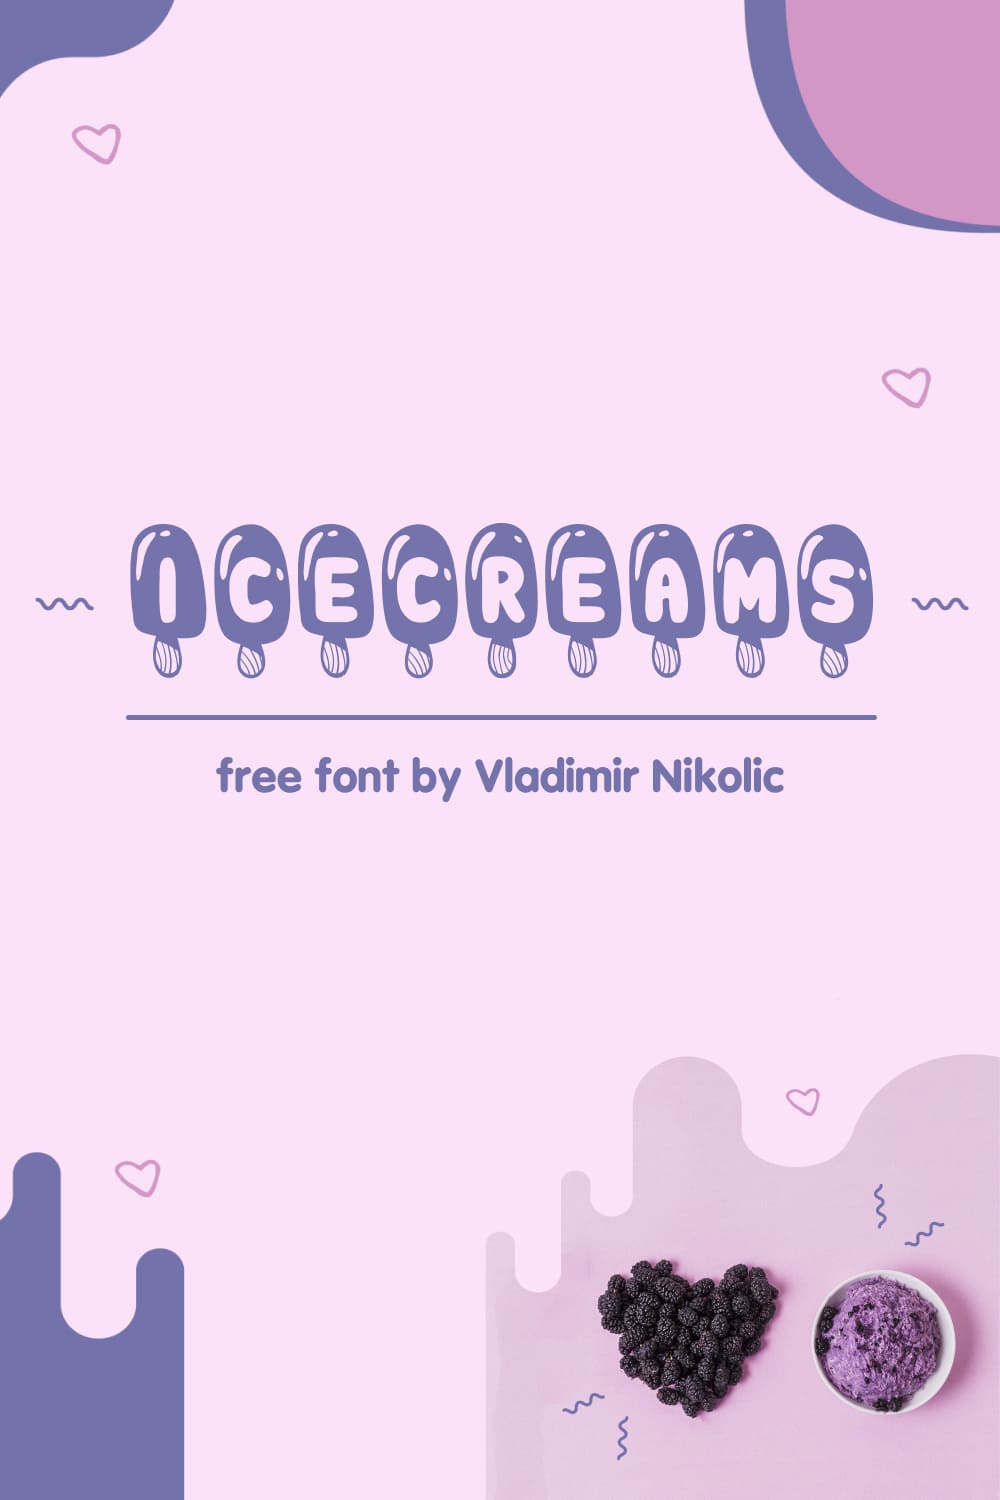 Free Ice Cream Font Pinterest Pink Collage Image by MasterBundles.